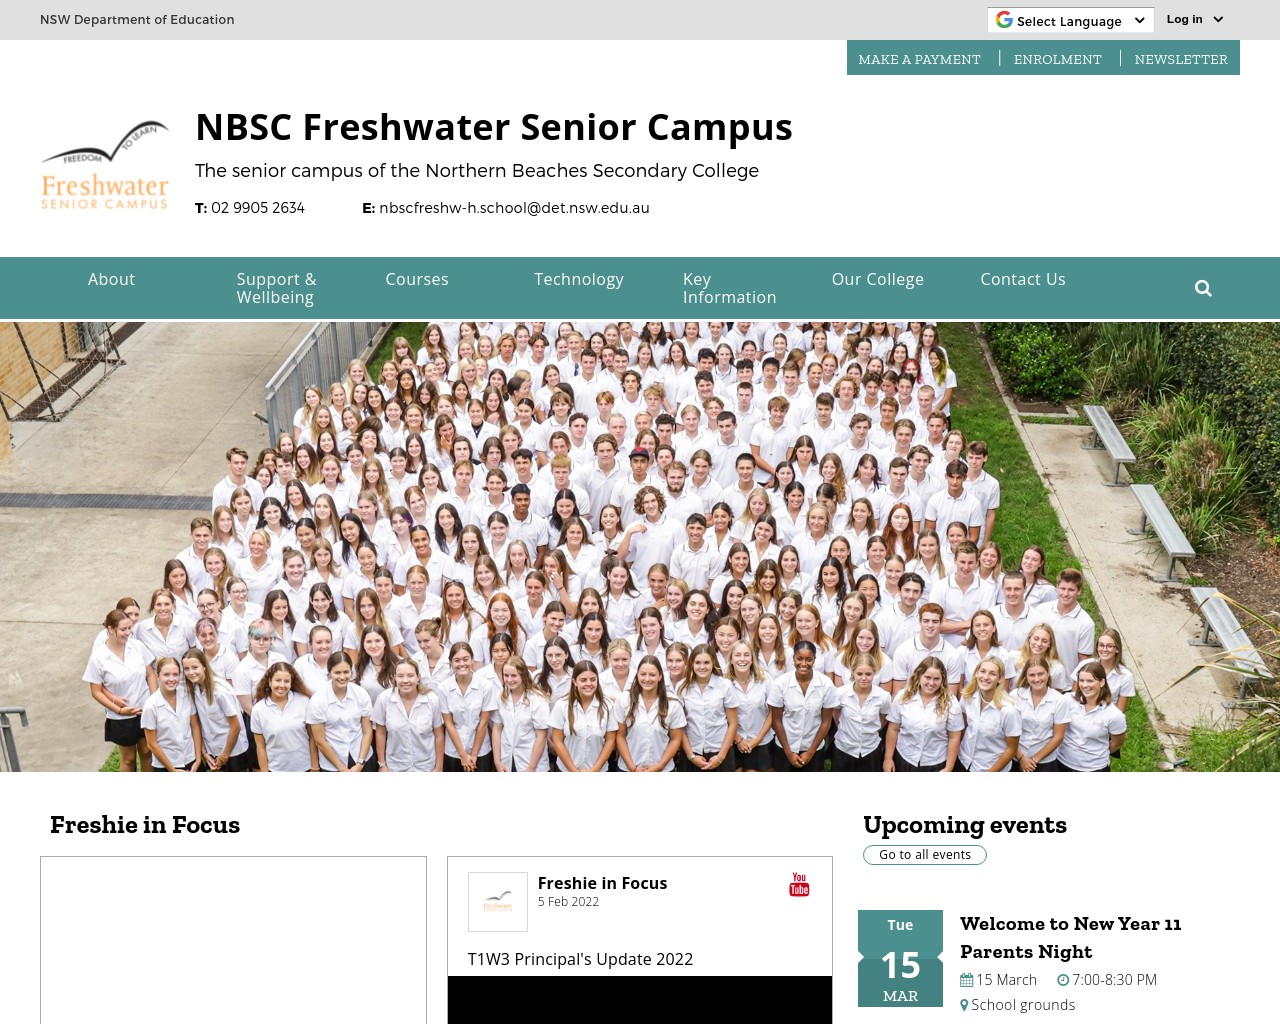 NBSC Freshwater Senior Campus